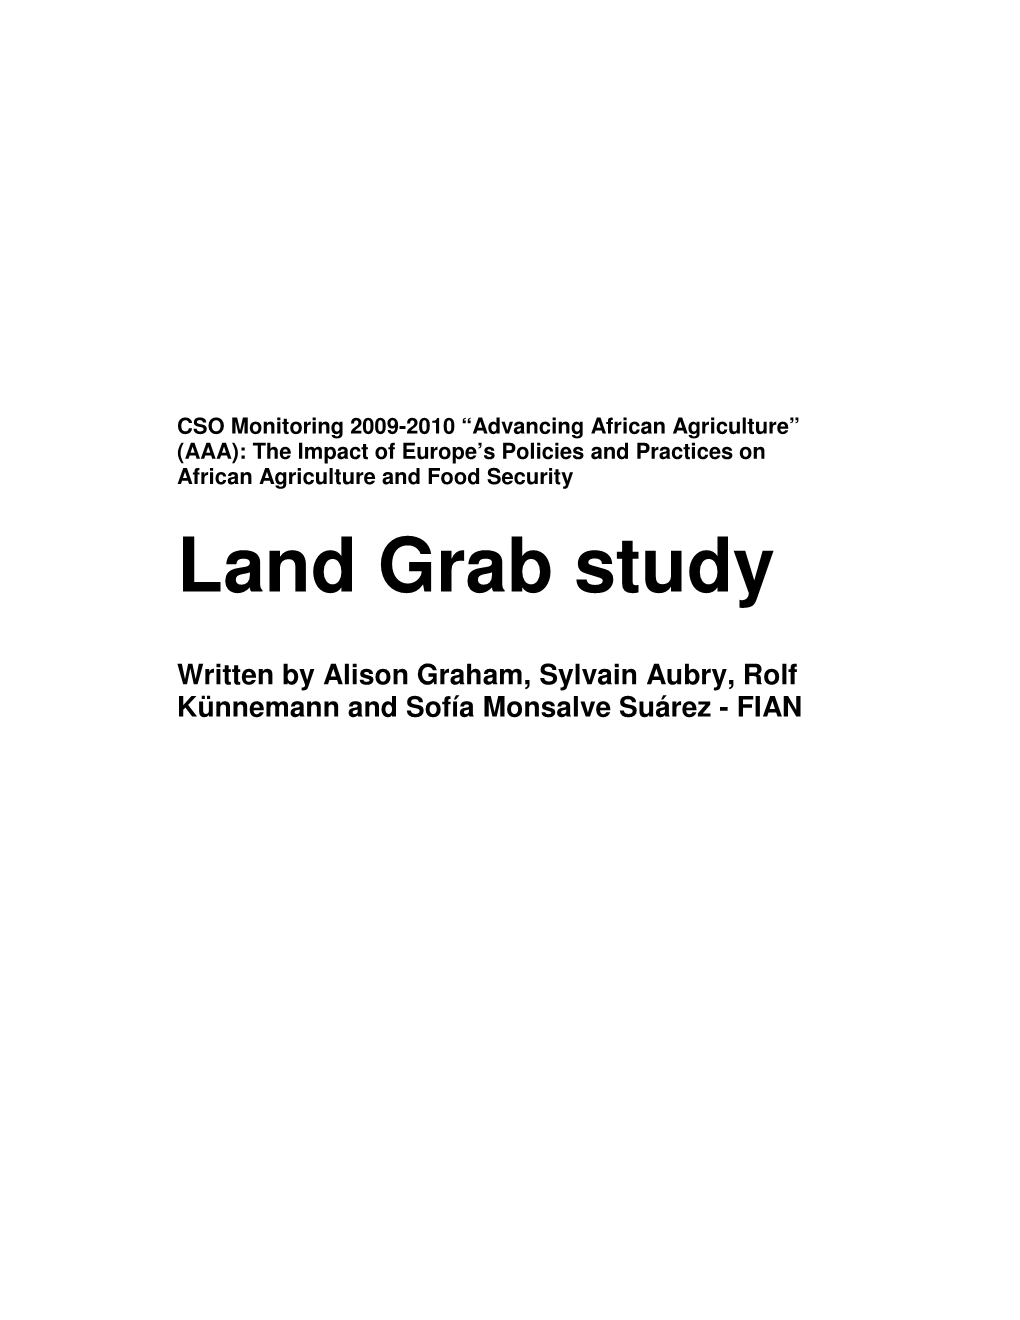 Land Grab Study